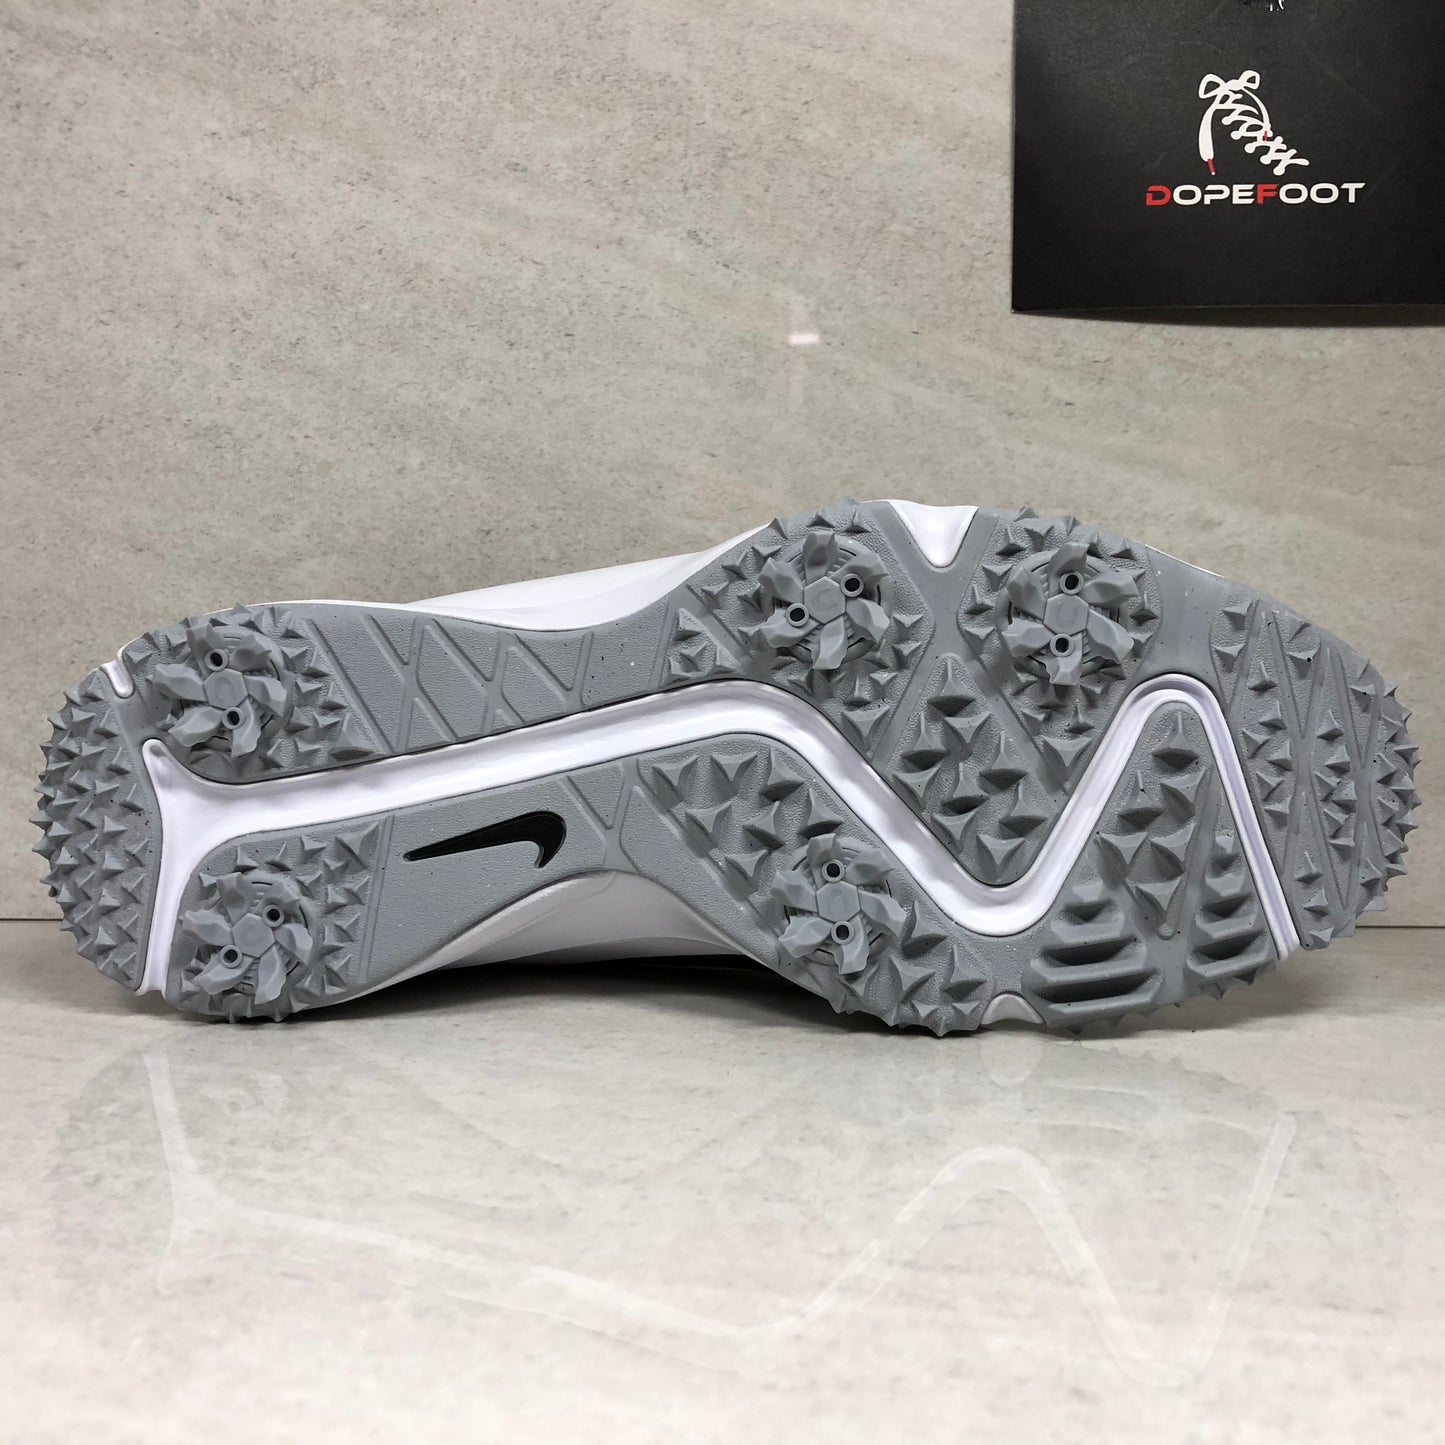 Nike Air Zoom Rival Golf Shoe Size 14 White/Black 878957 100